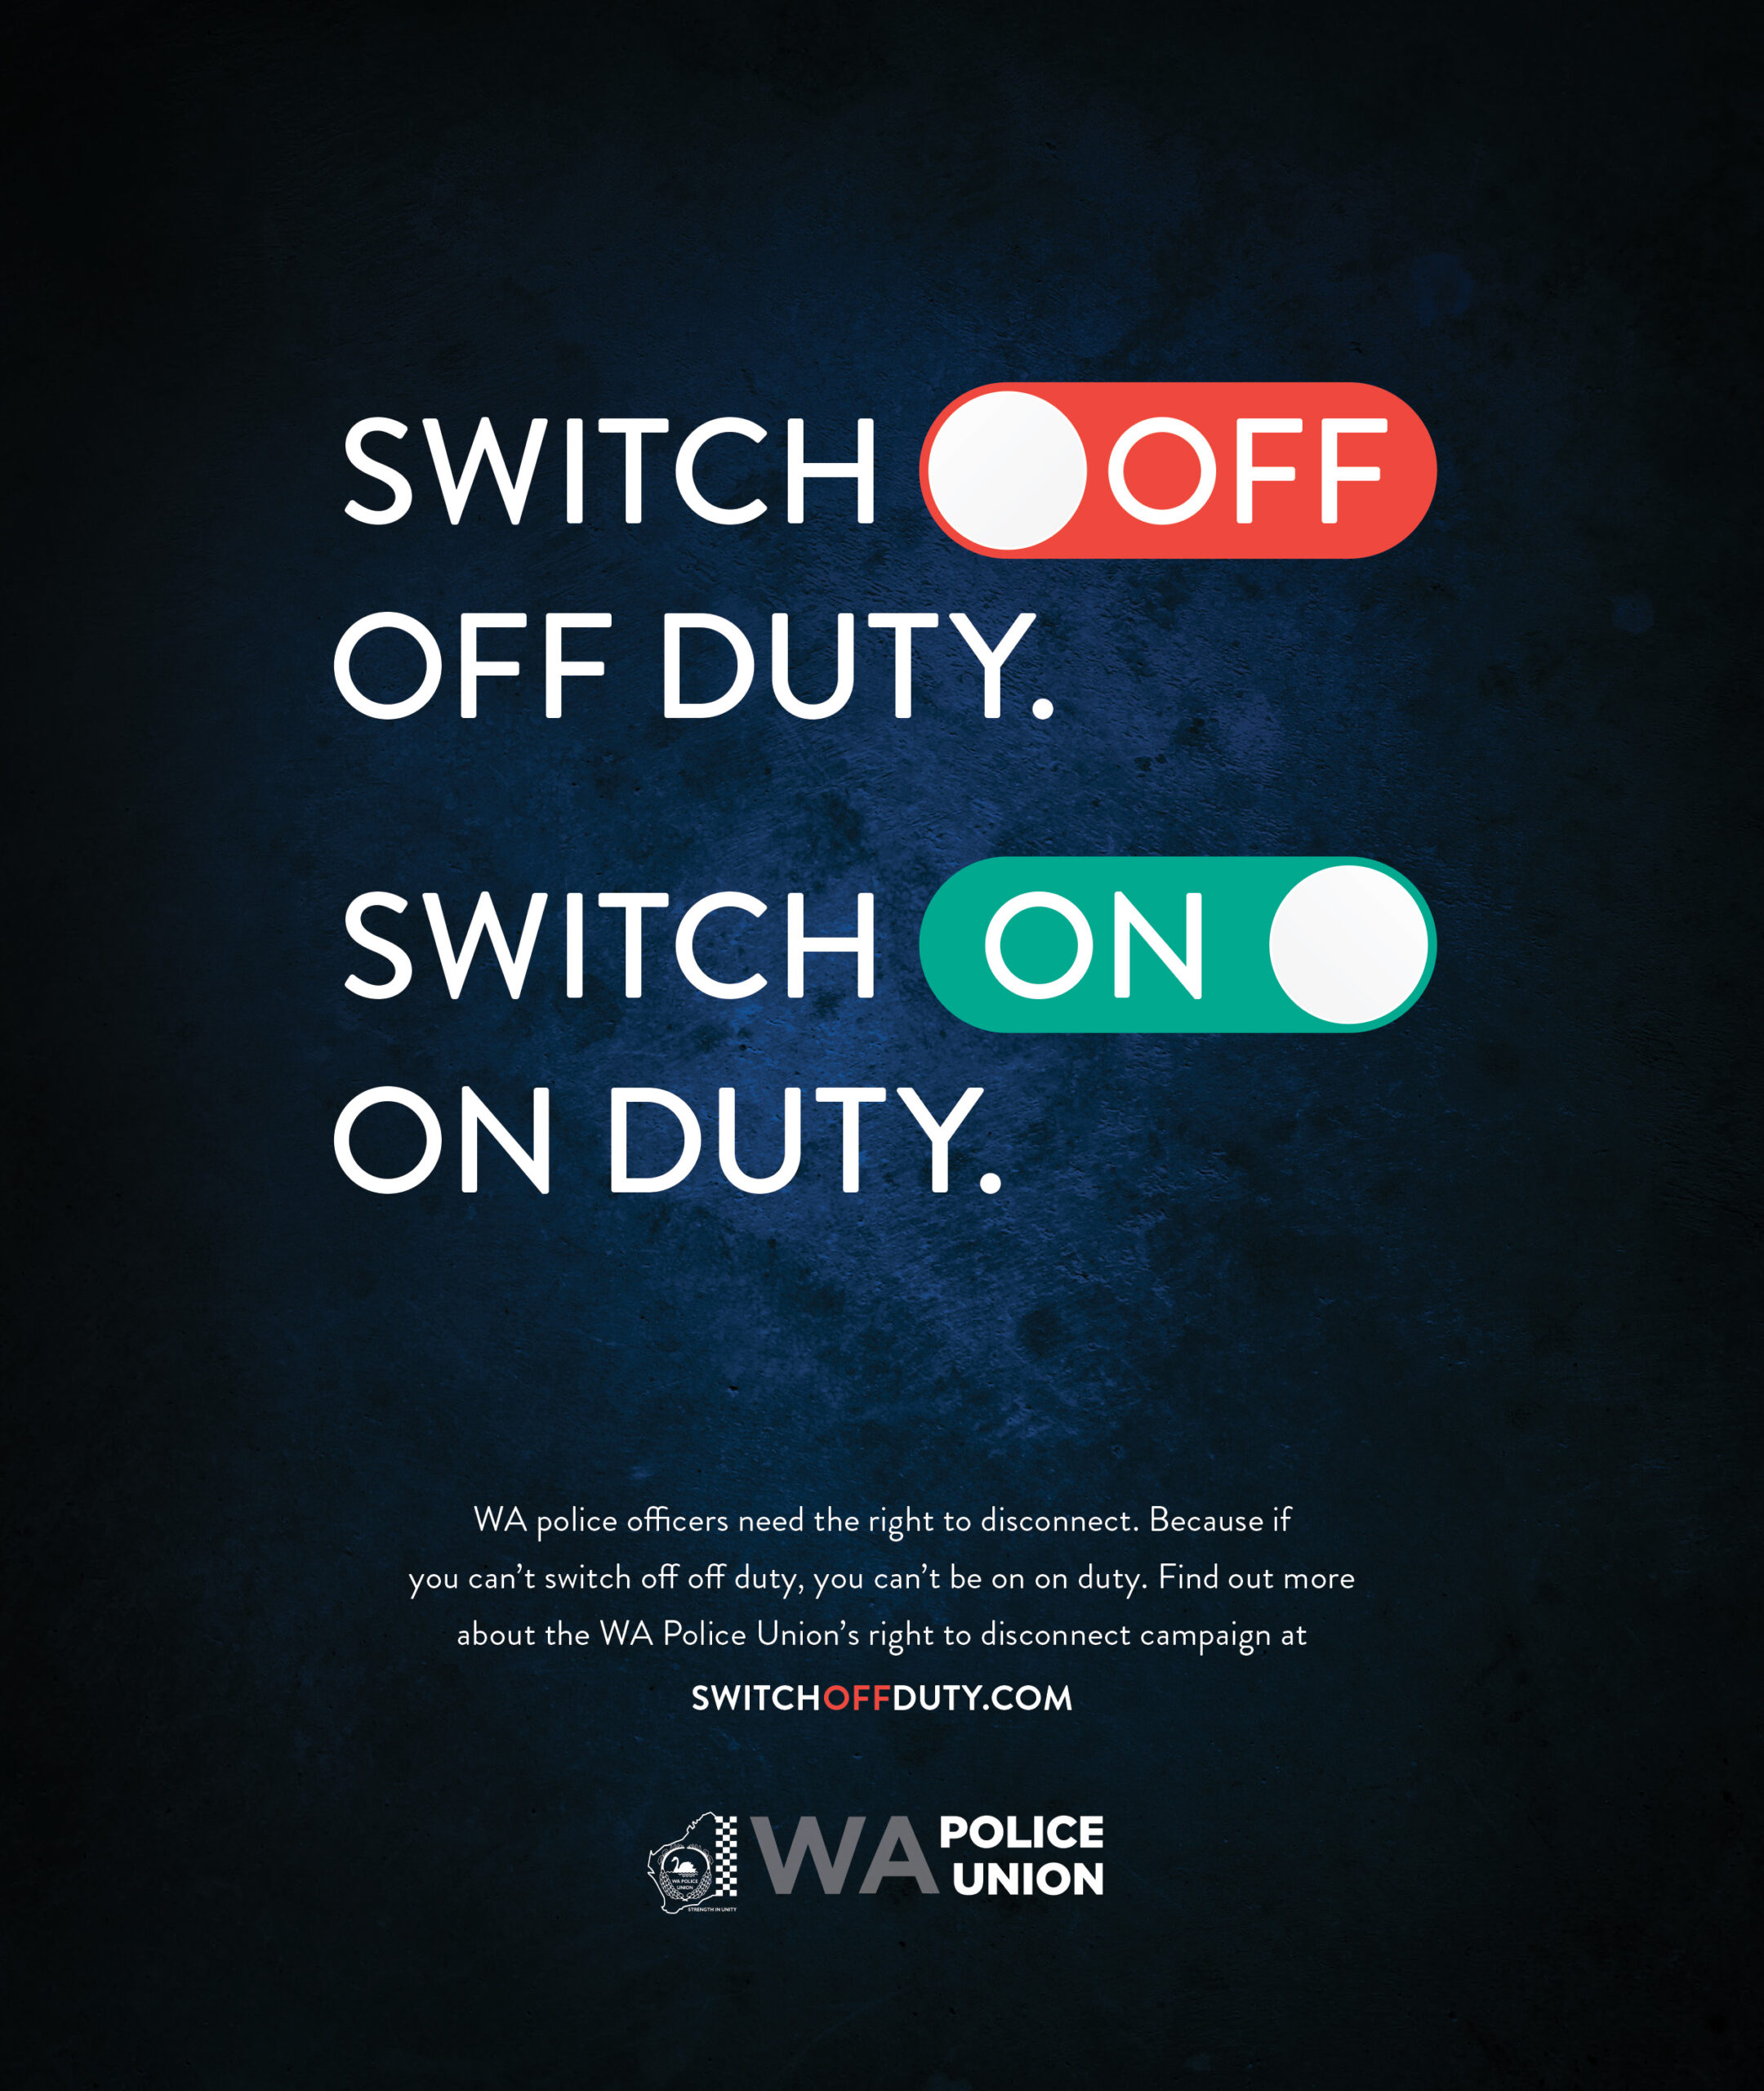 Switch off off duty. Switch on on duty.